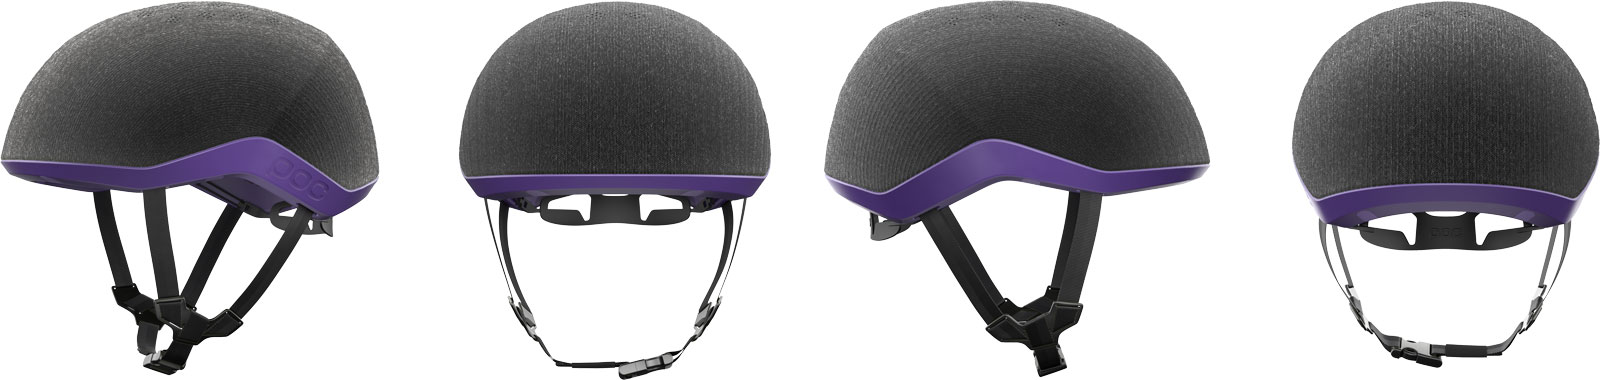 poc myelin commuter helmet for cyclists purple grey